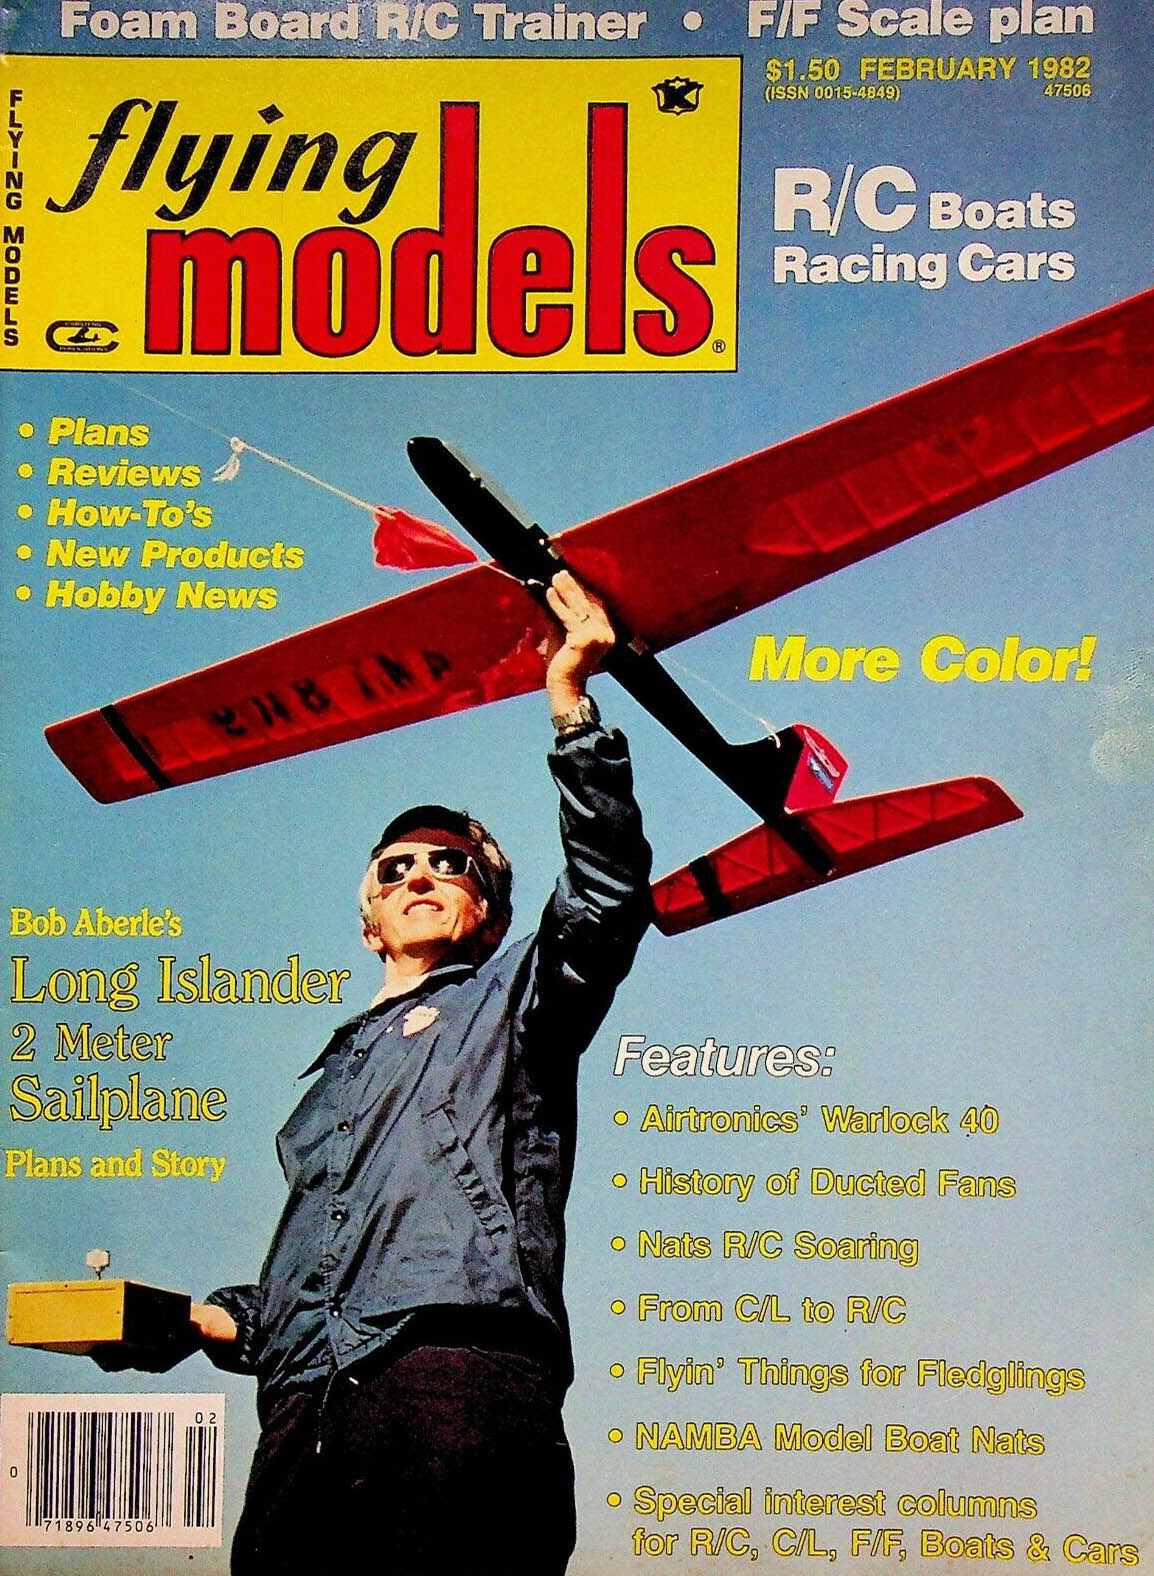 Flying Models February 1982, , Foam Board R/C Trainer - F/F Scale Plan